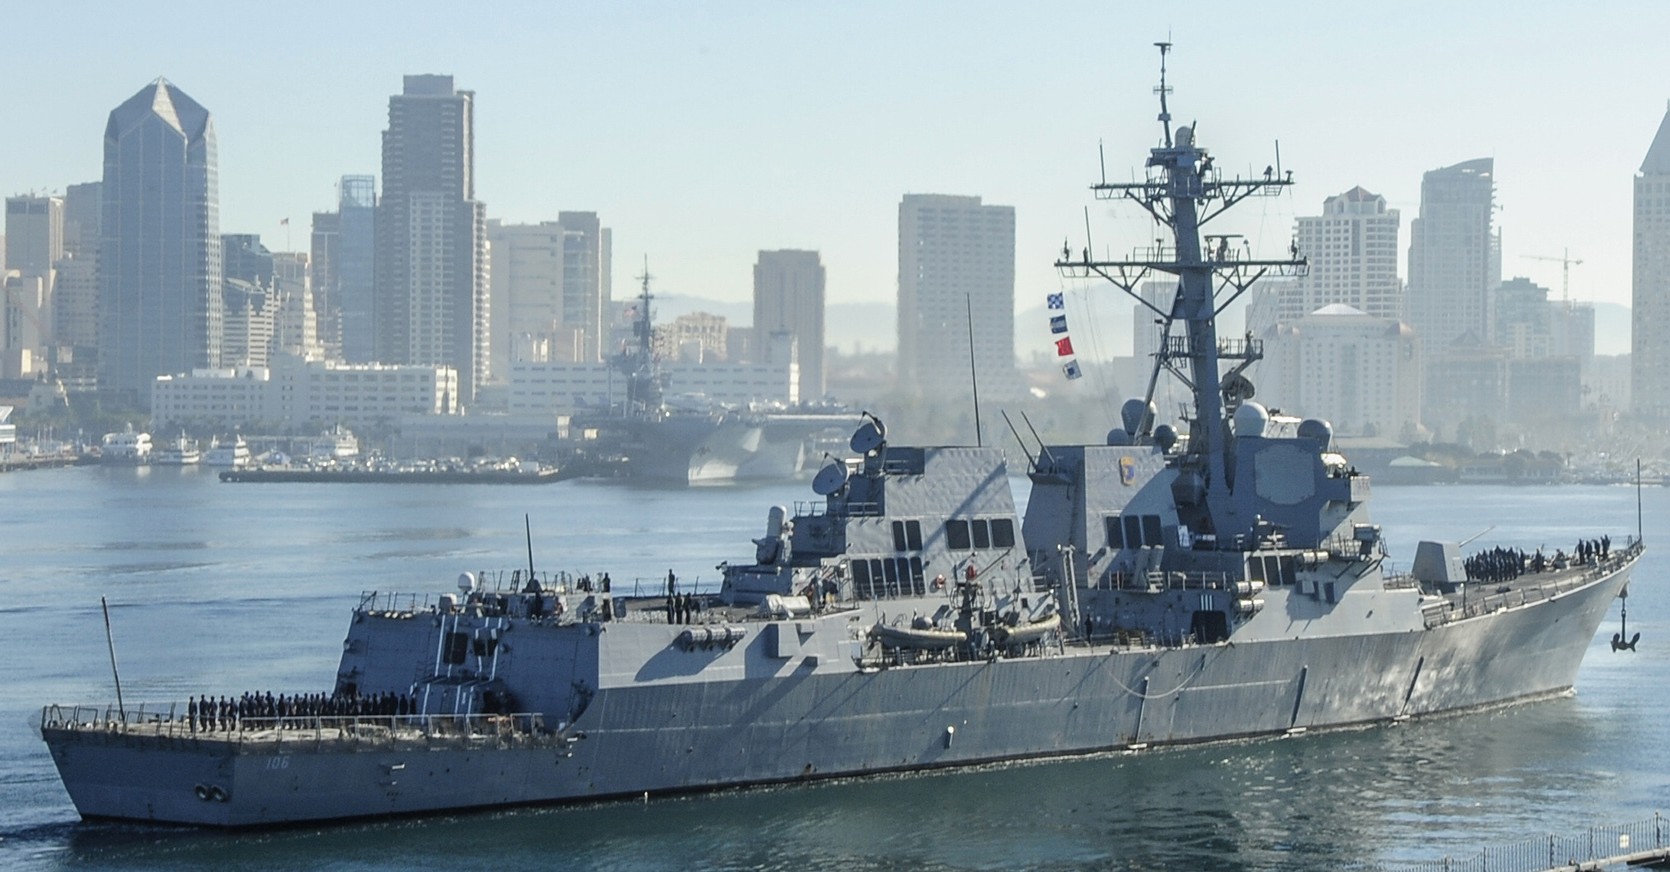 ddg-106 uss stockdale arleigh burke class guided missile destroyer aegis us navy san diego california 79